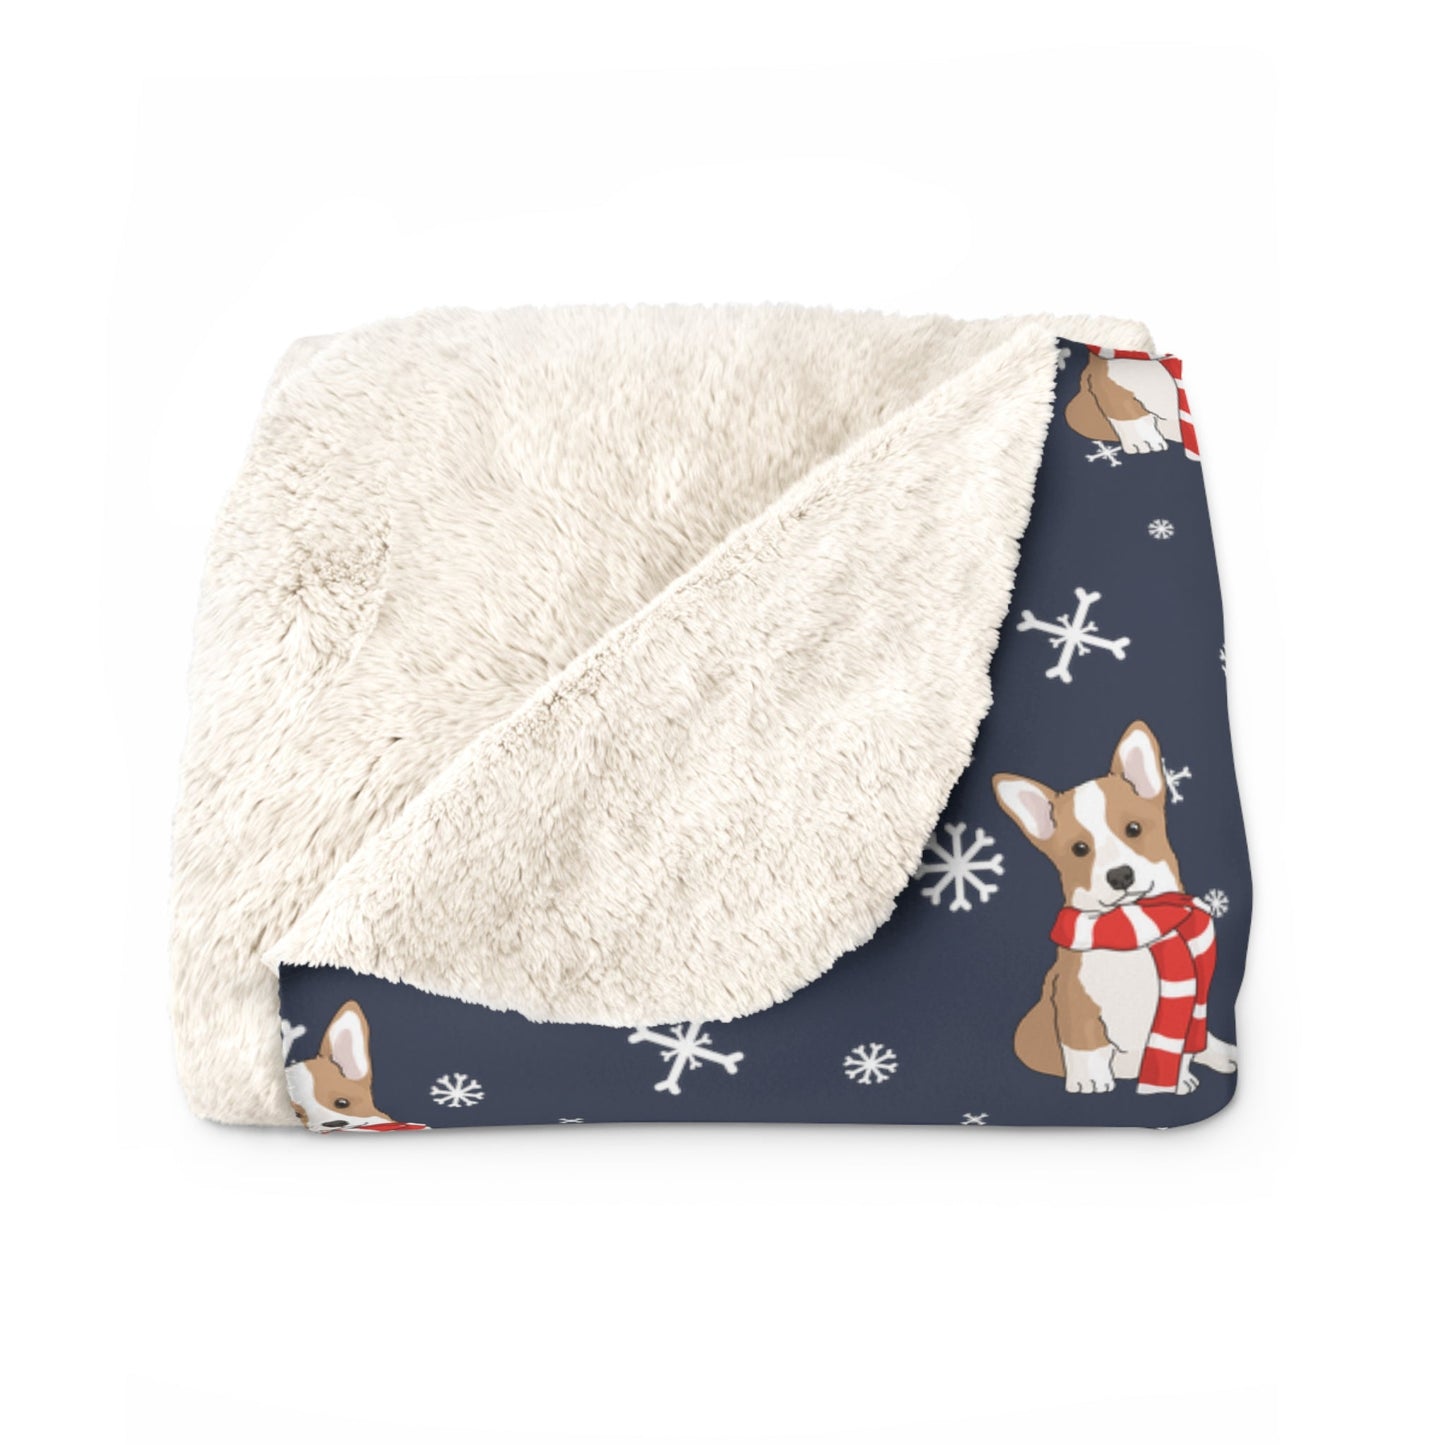 Winter Corgi Puppy Blanket | Sherpa Fleece - Detezi Designs-21059061493361481978